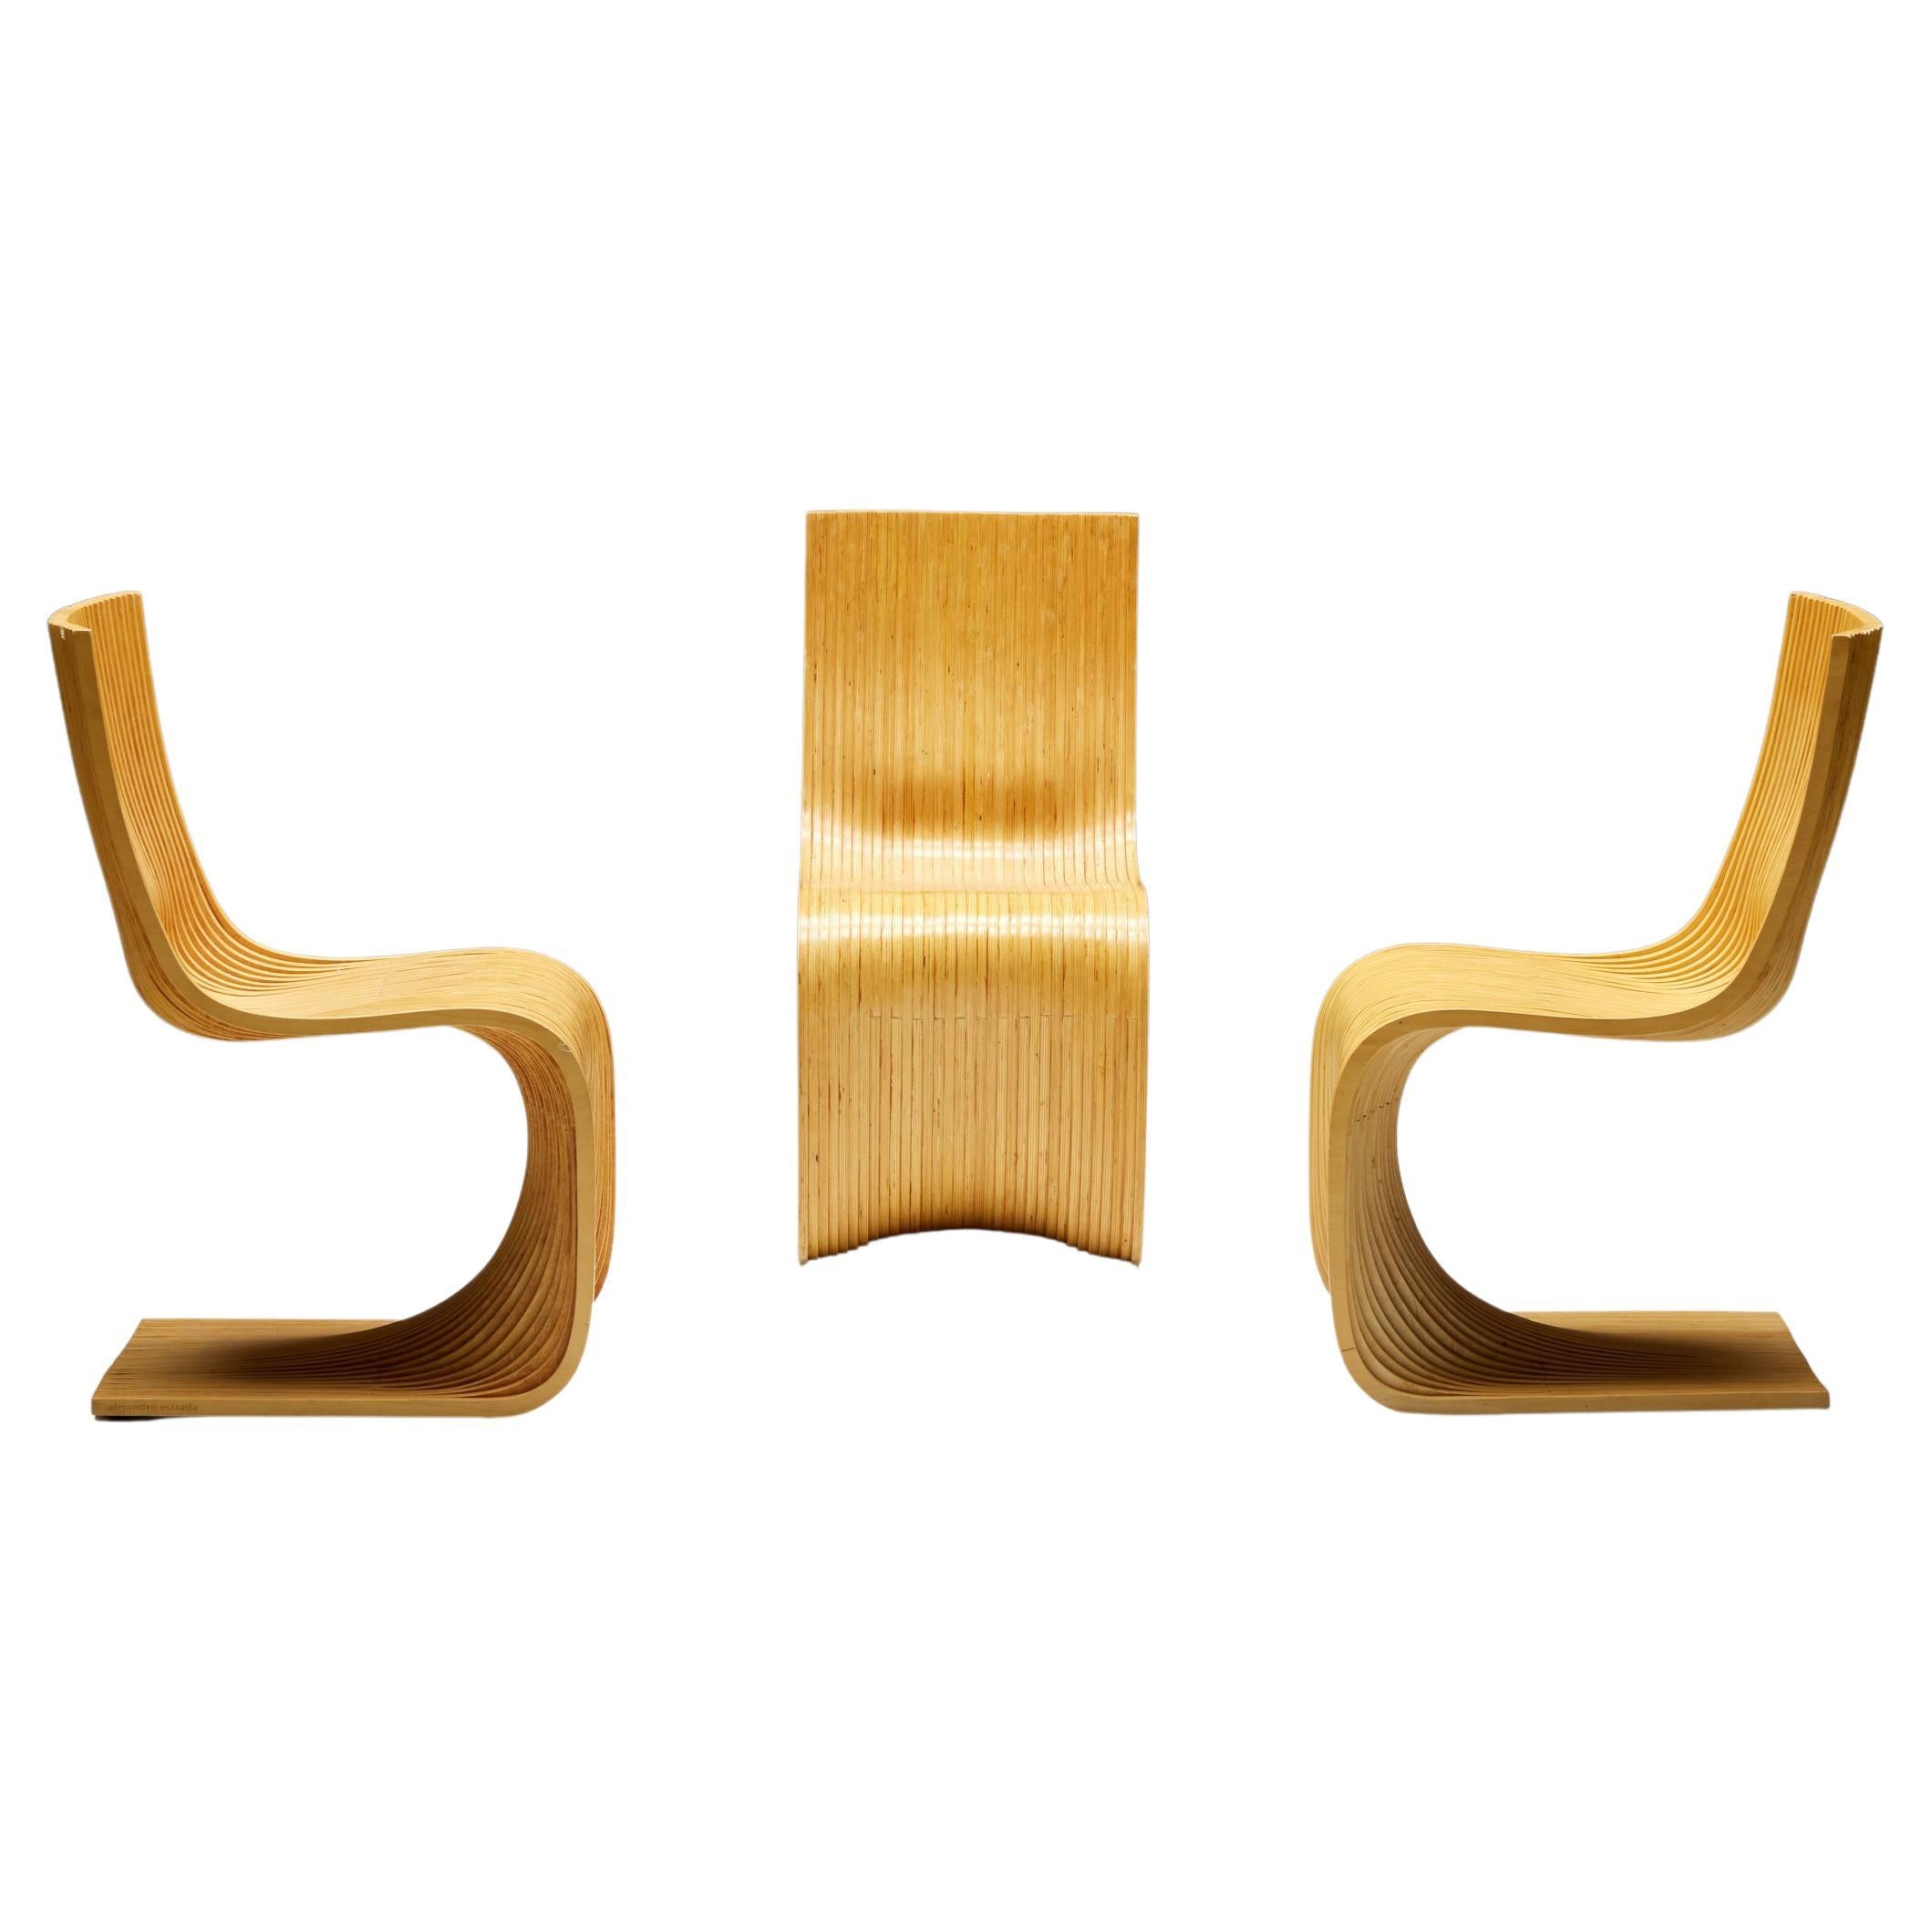 Alejandro Estrada Bamboo Dining Chairs for Piegatto, 2006 For Sale